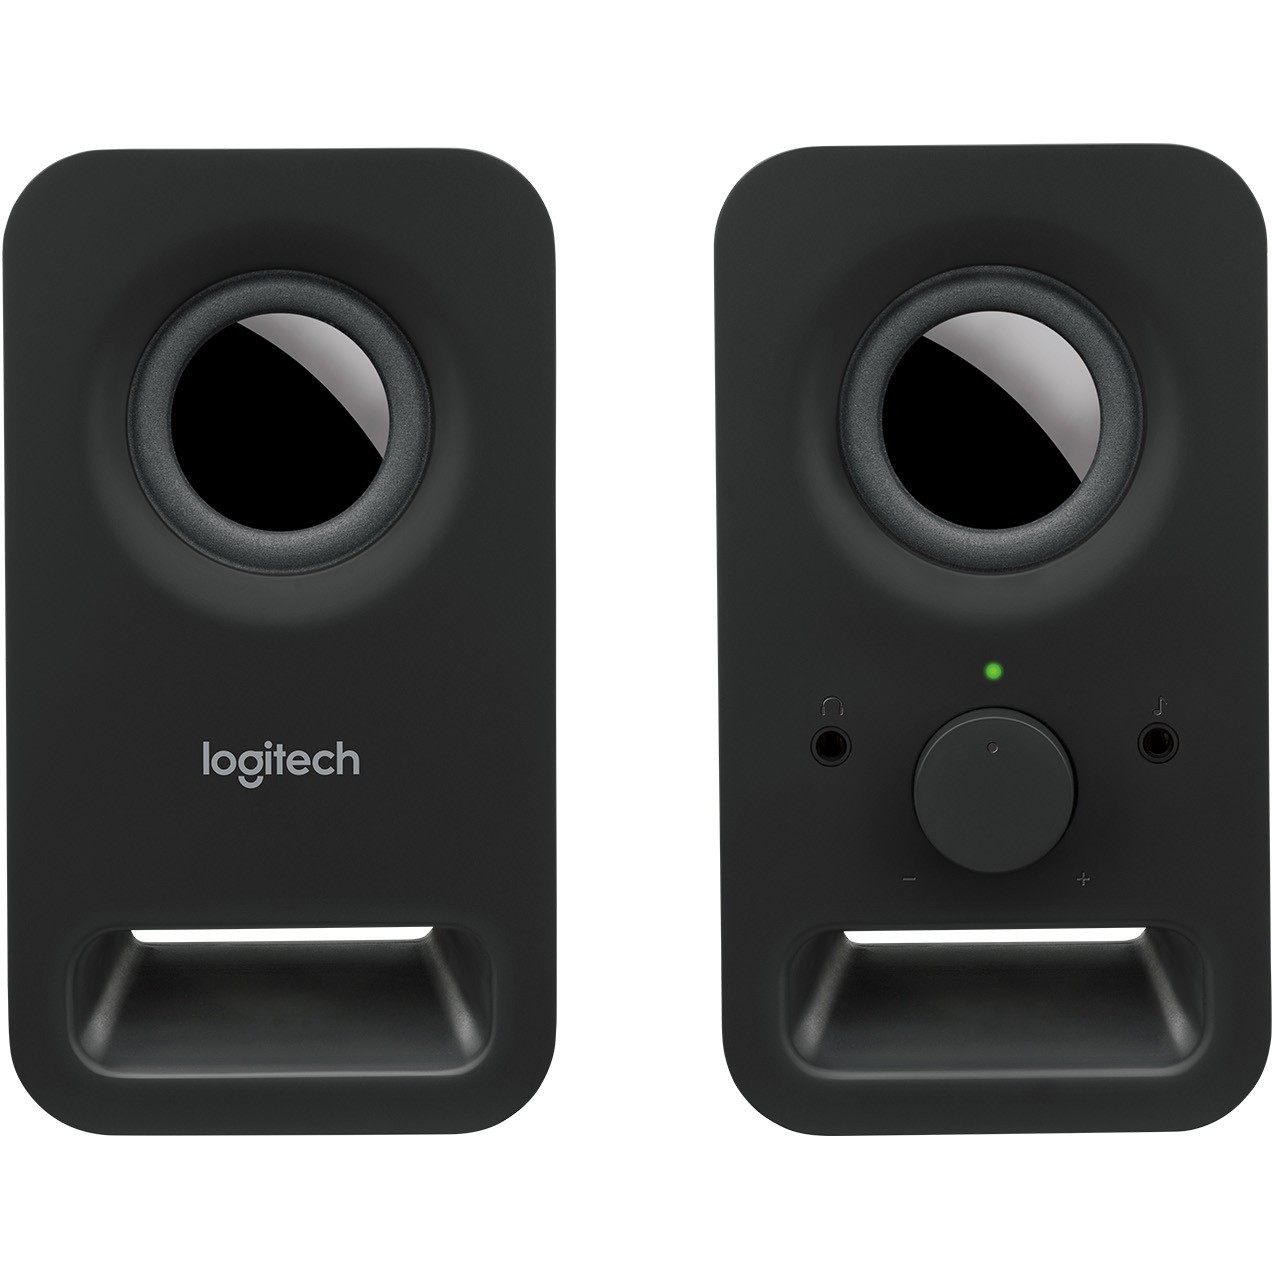 Logitech Z150 Multimedia Speakers Schwarz Kabelgebunden 6 W